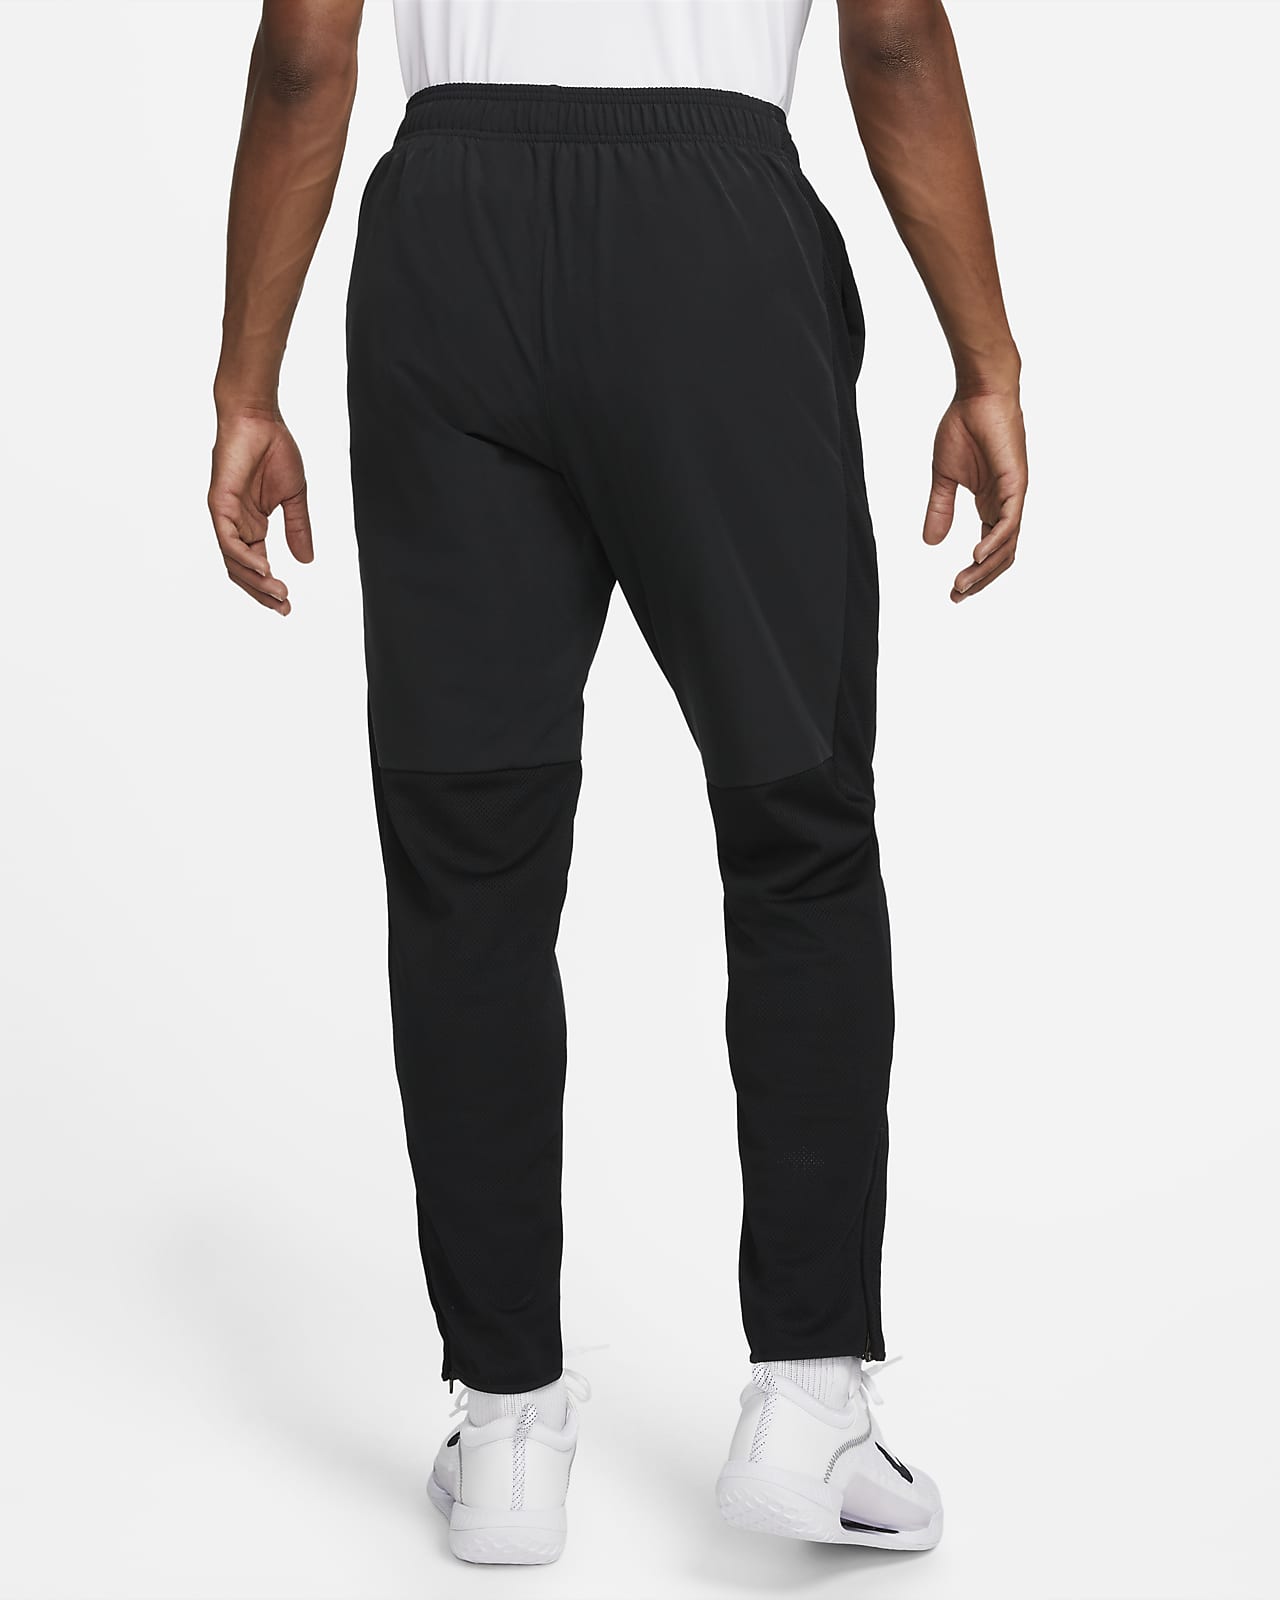 Nike Mens Tennis Trousers NikeCourt small sports pants active sportswear new